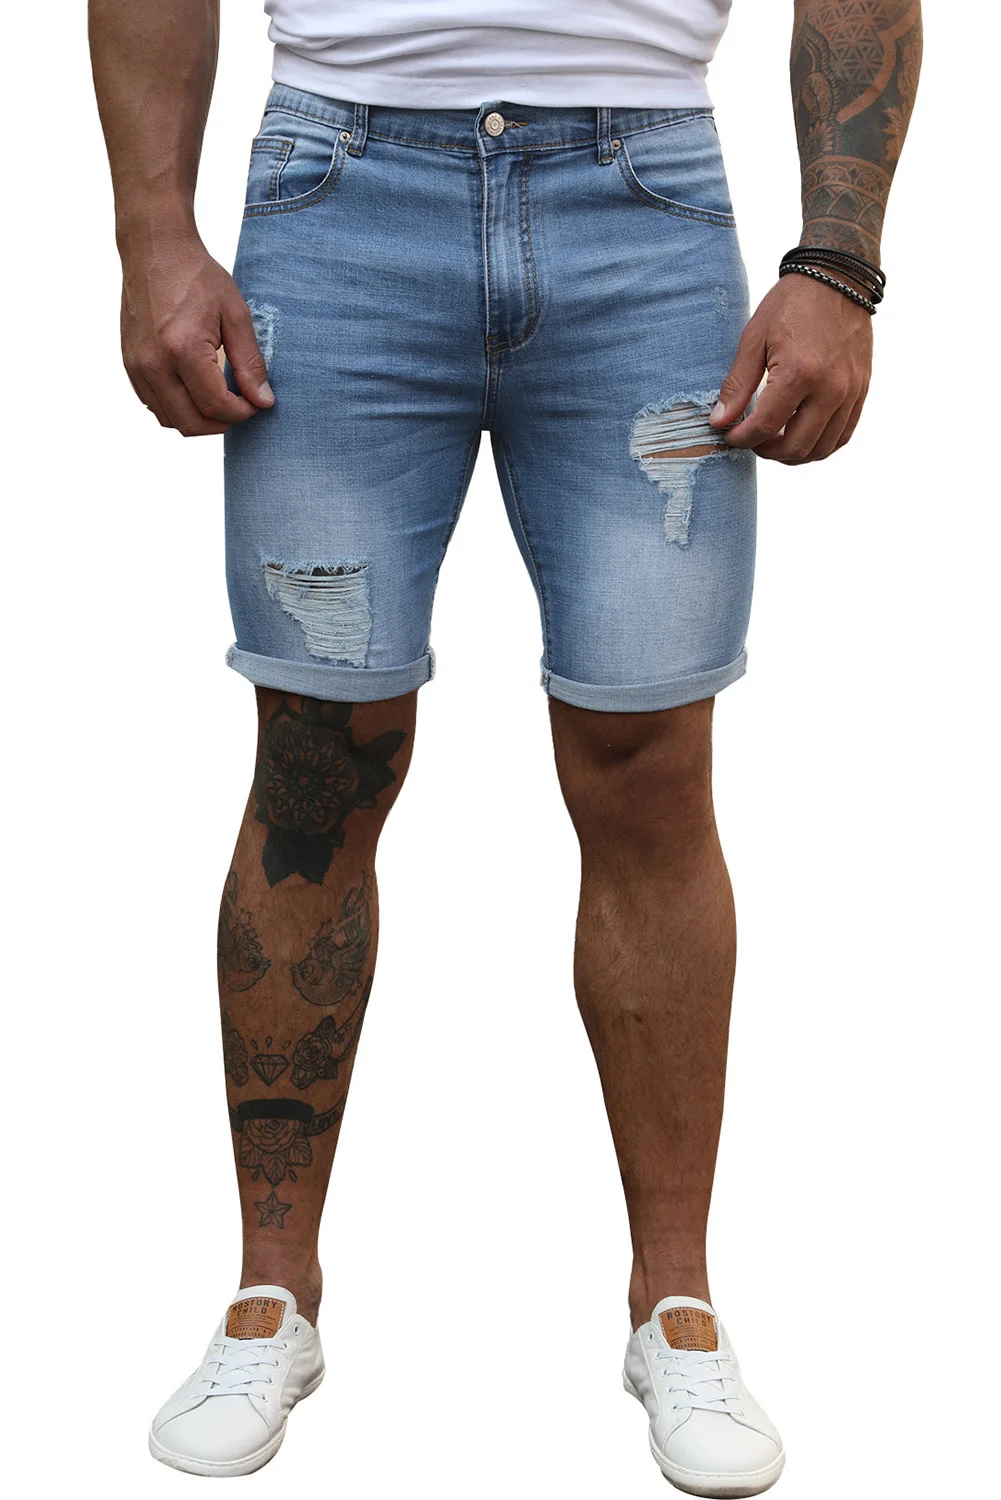 Sky Blue Distressed Low-rise Men's Denim Shorts